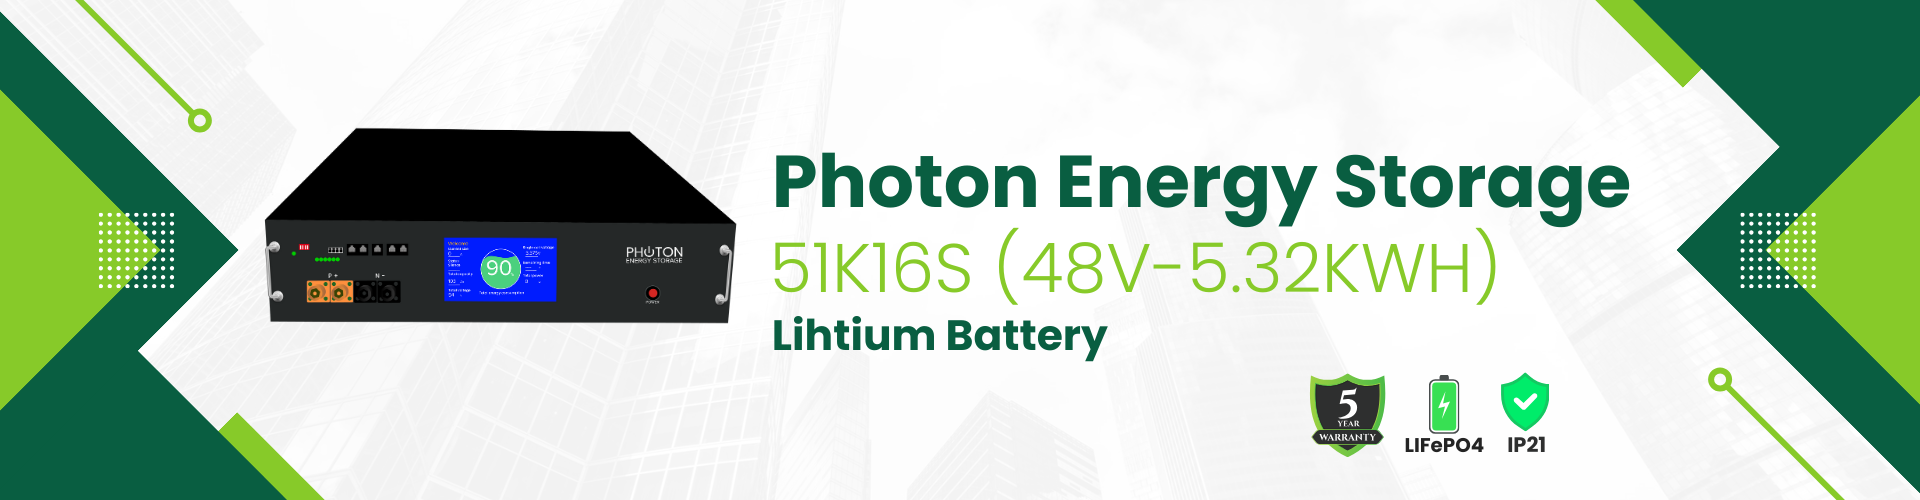 Photon Lithium Battery